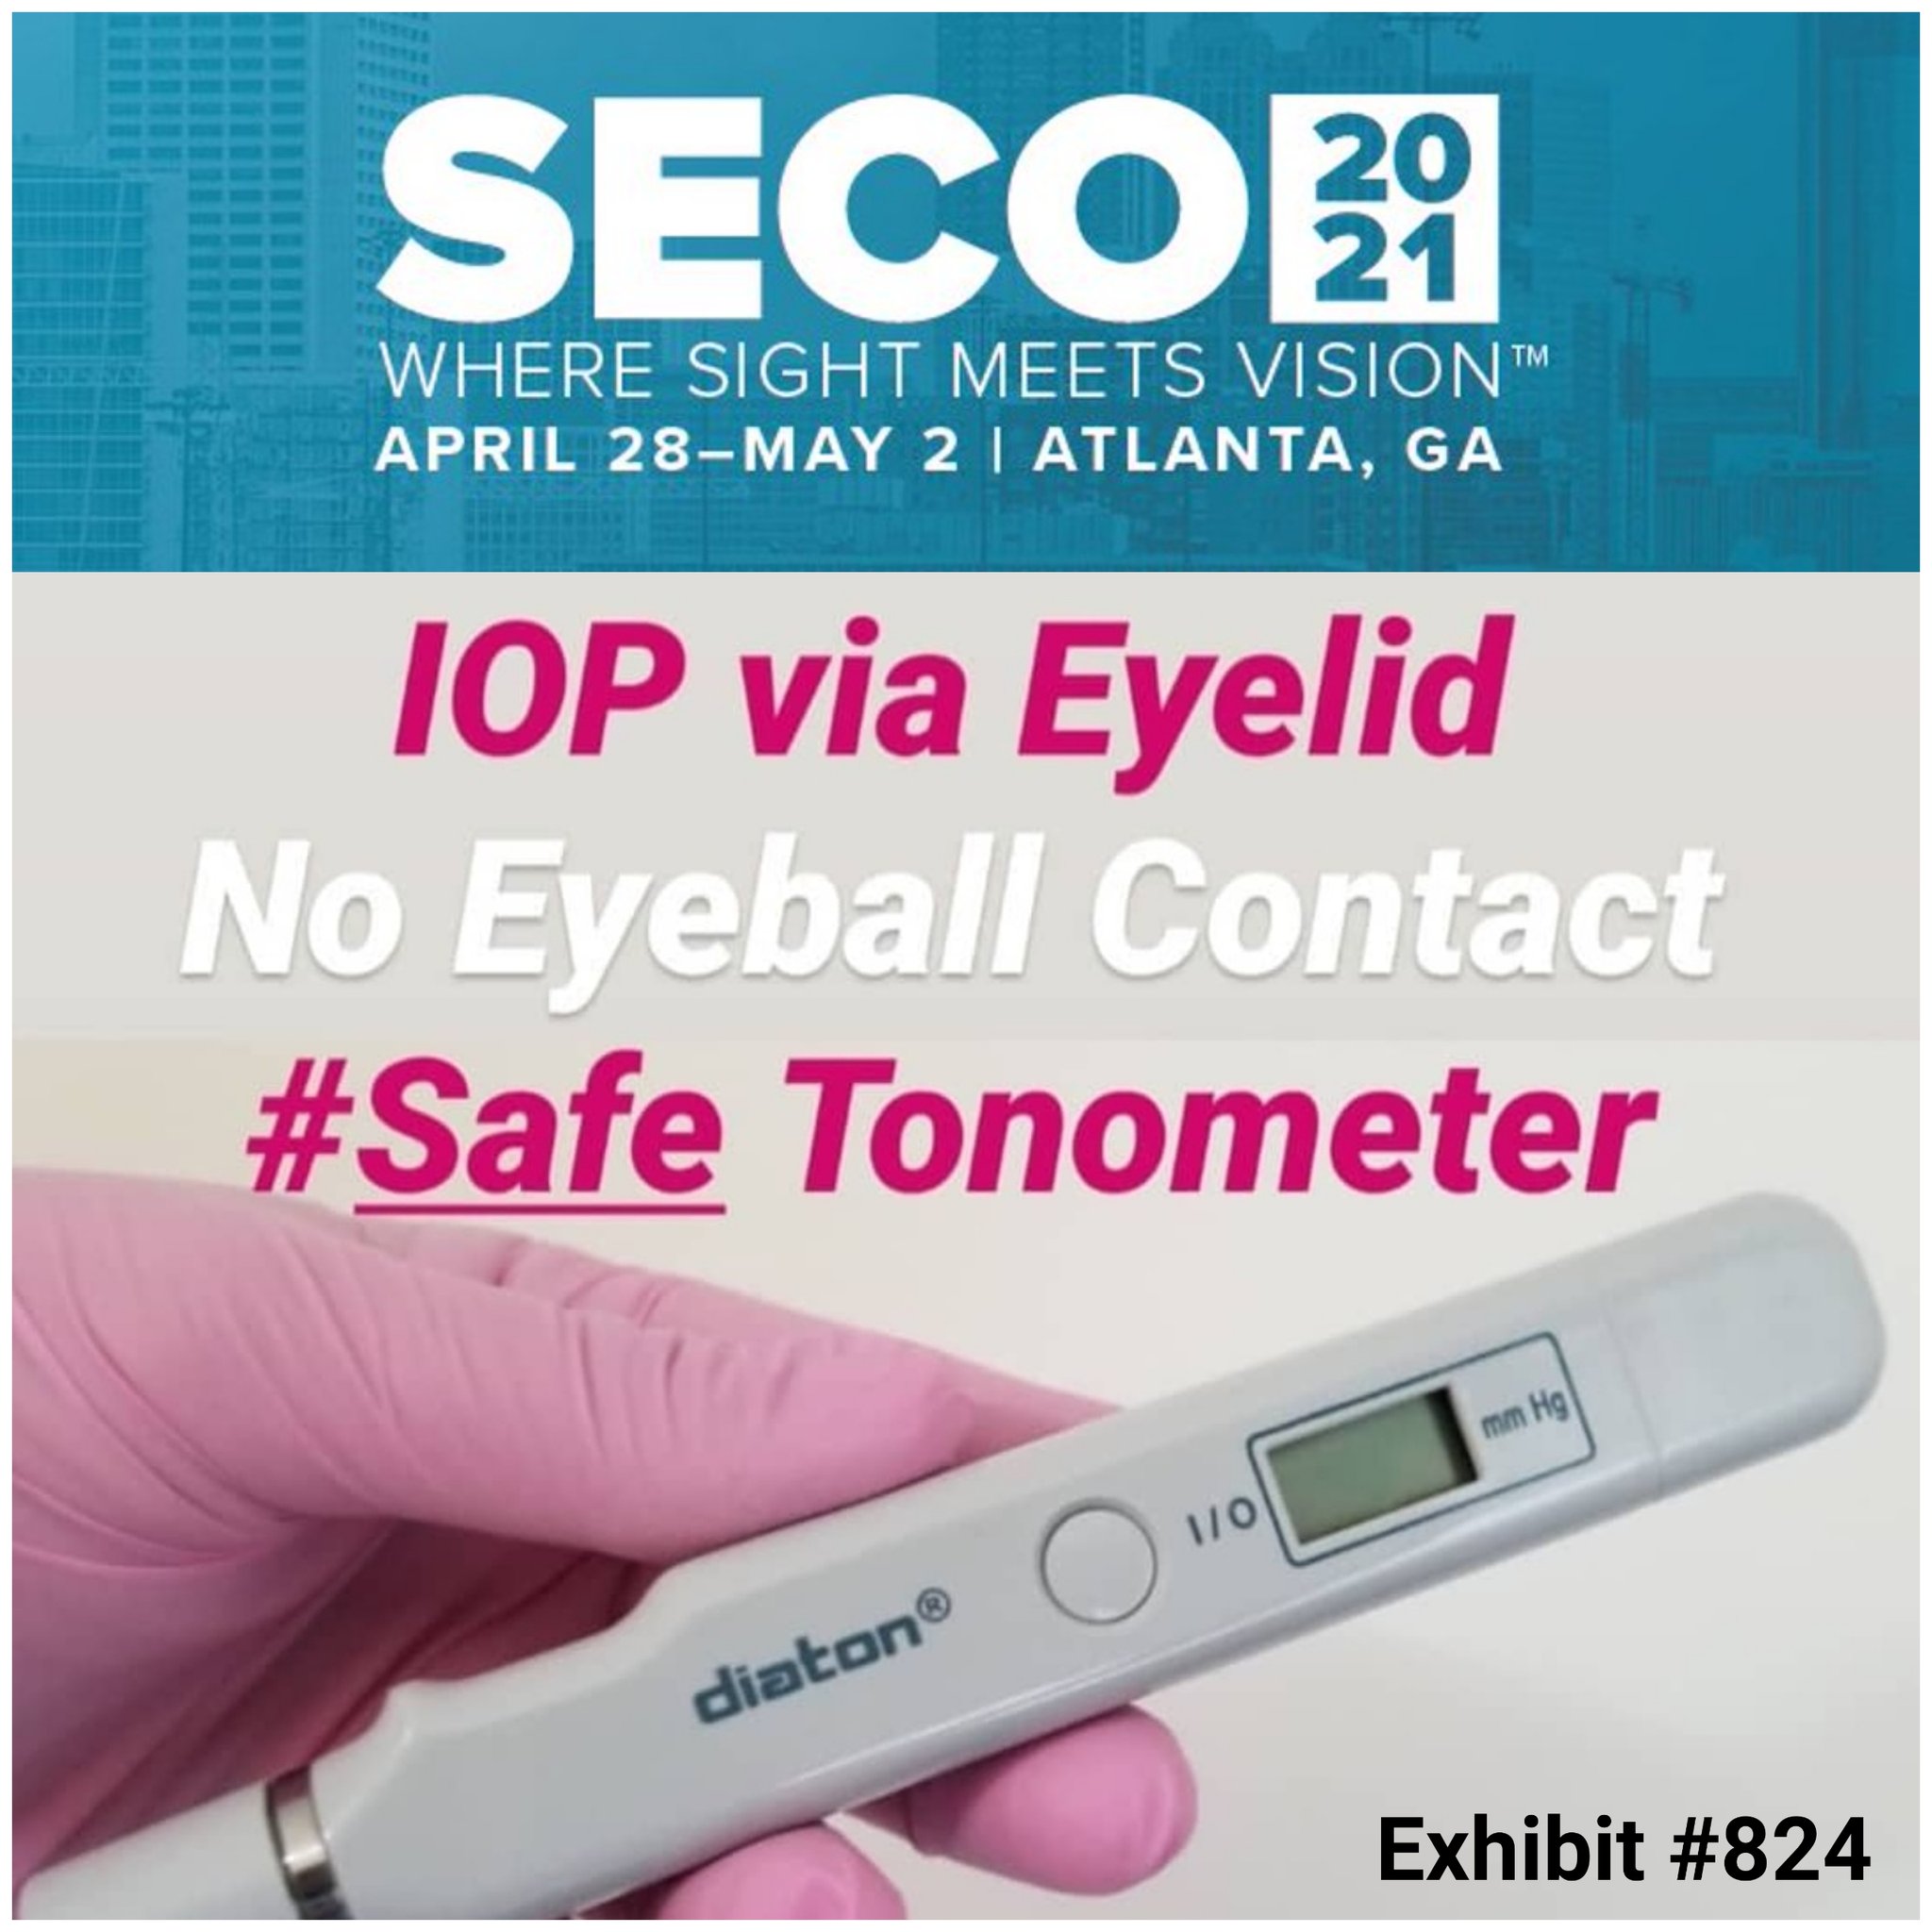 Safest Tonometer Diaton Featured at SECO International